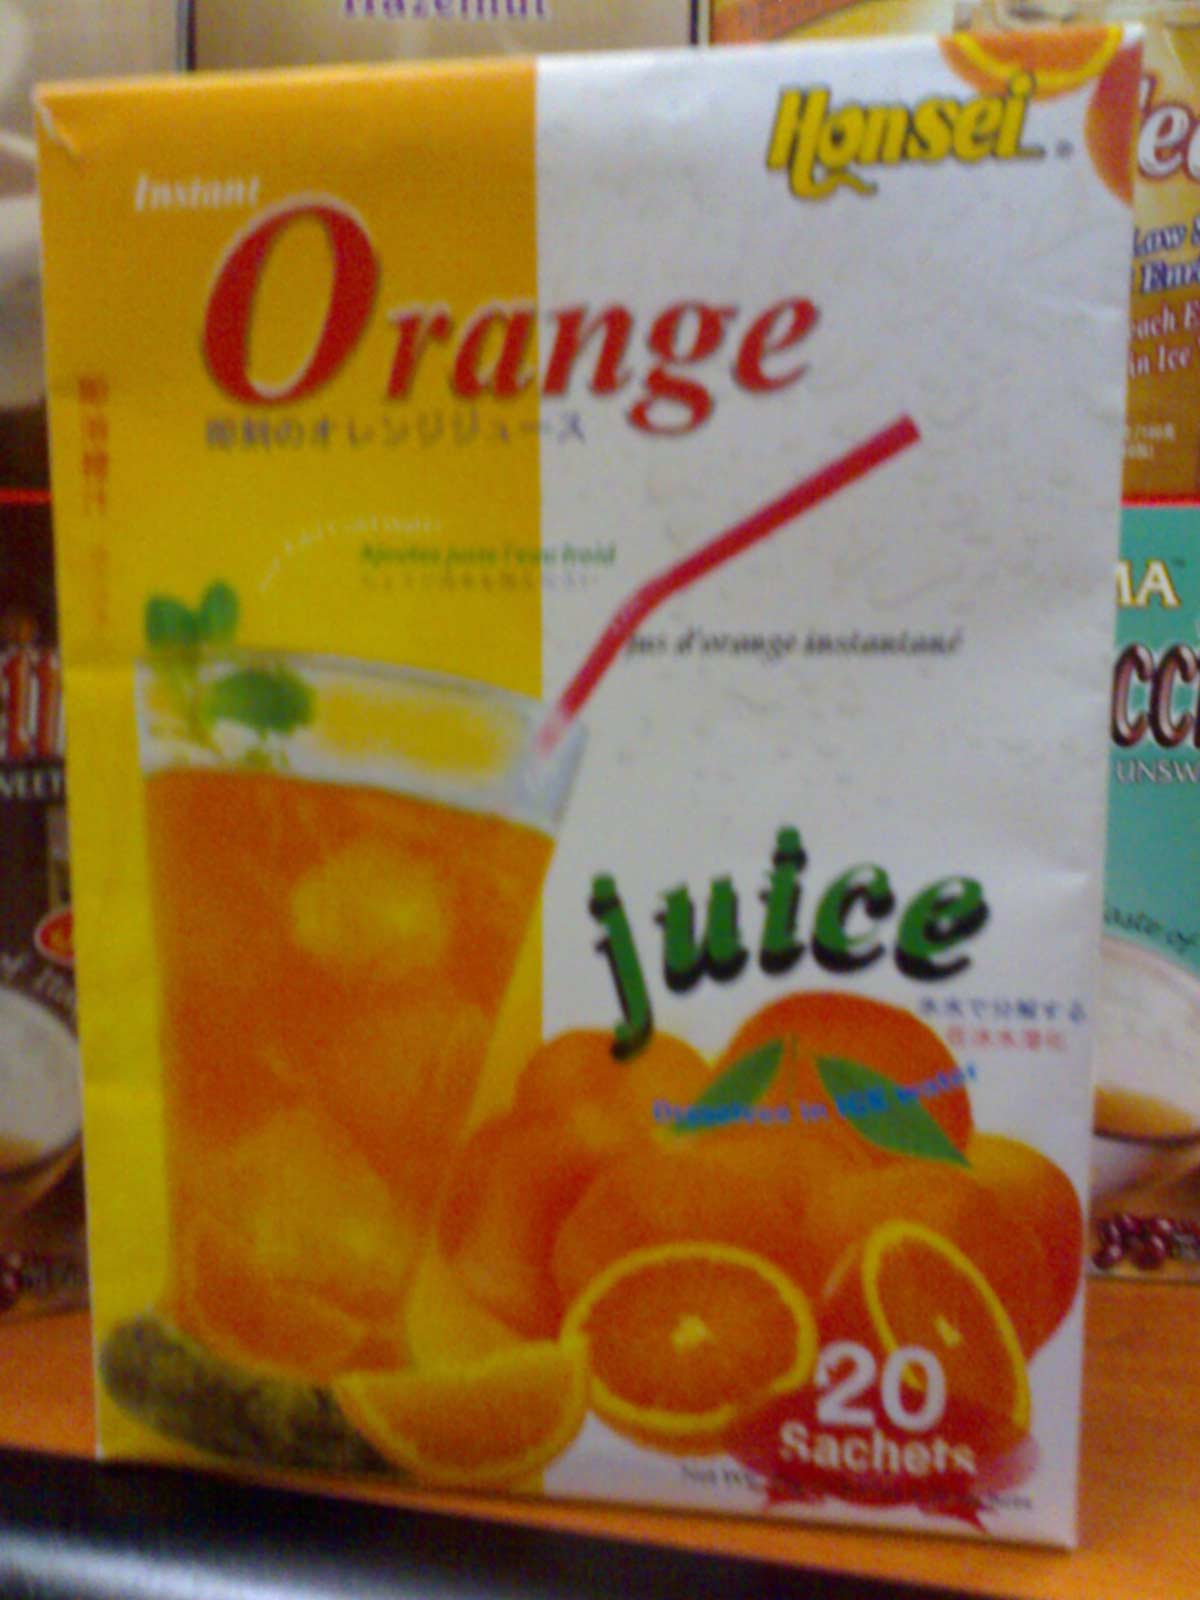  Honsei Orange & Mango Powder Drink